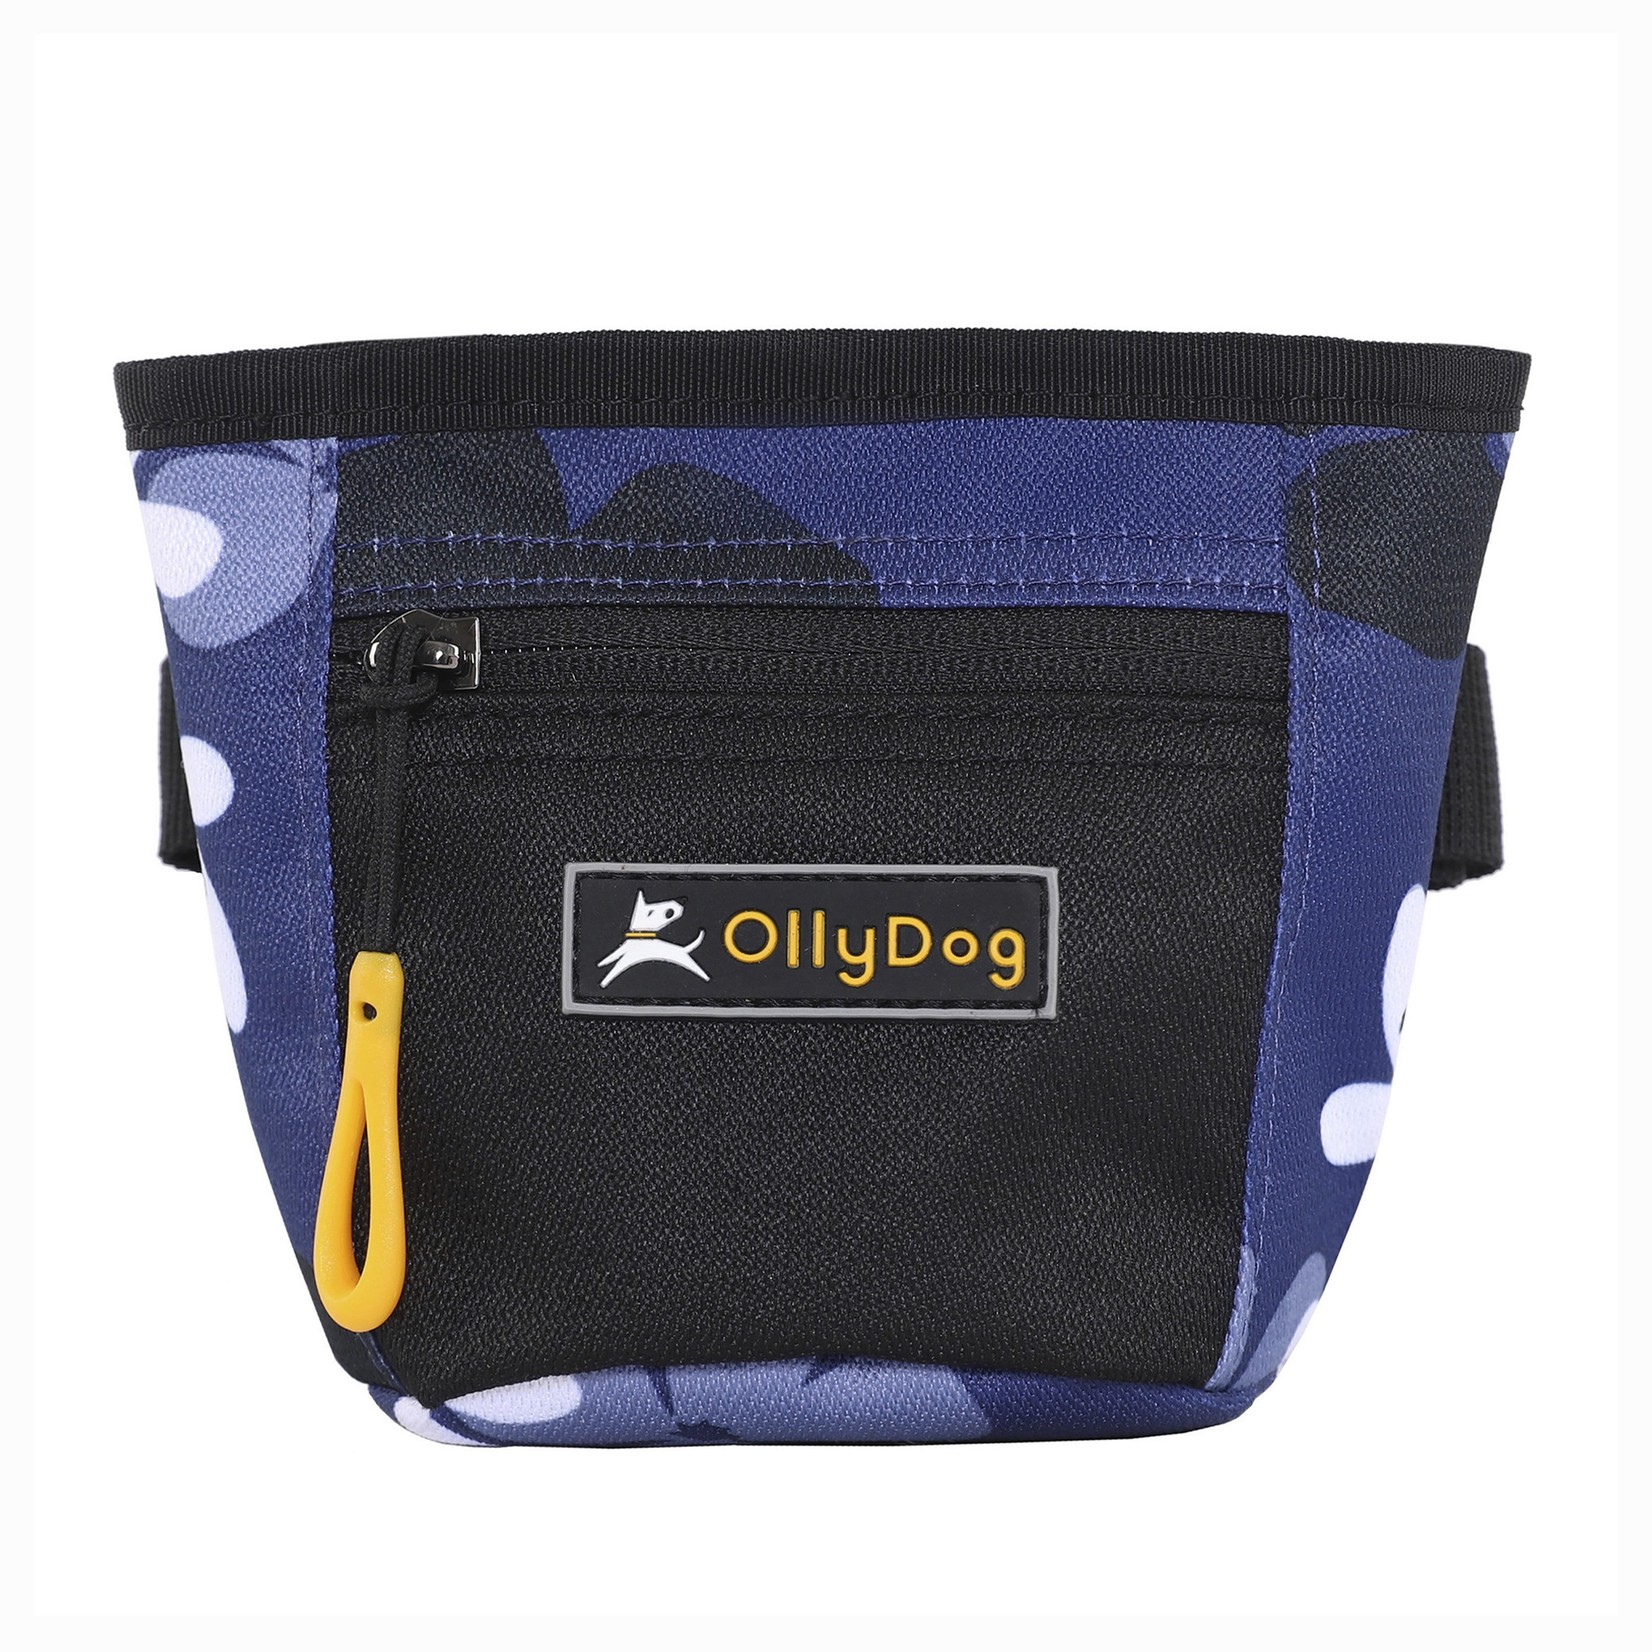 Olly Dog OllyDog Treat Bag